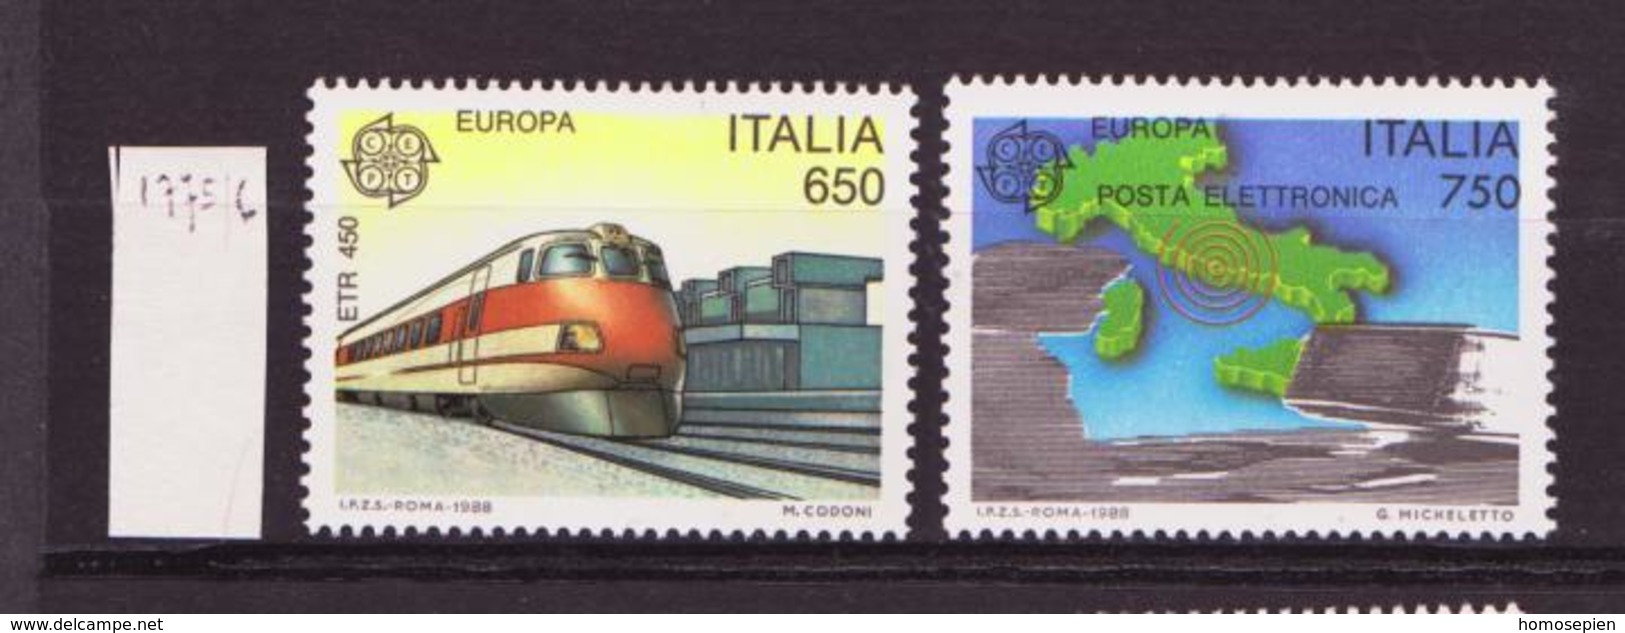 Europa CEPT 1988 Italie - Italy - Italien Y&T N°1775 à 1776 - Michel N°2043 à 2044 *** - 1988